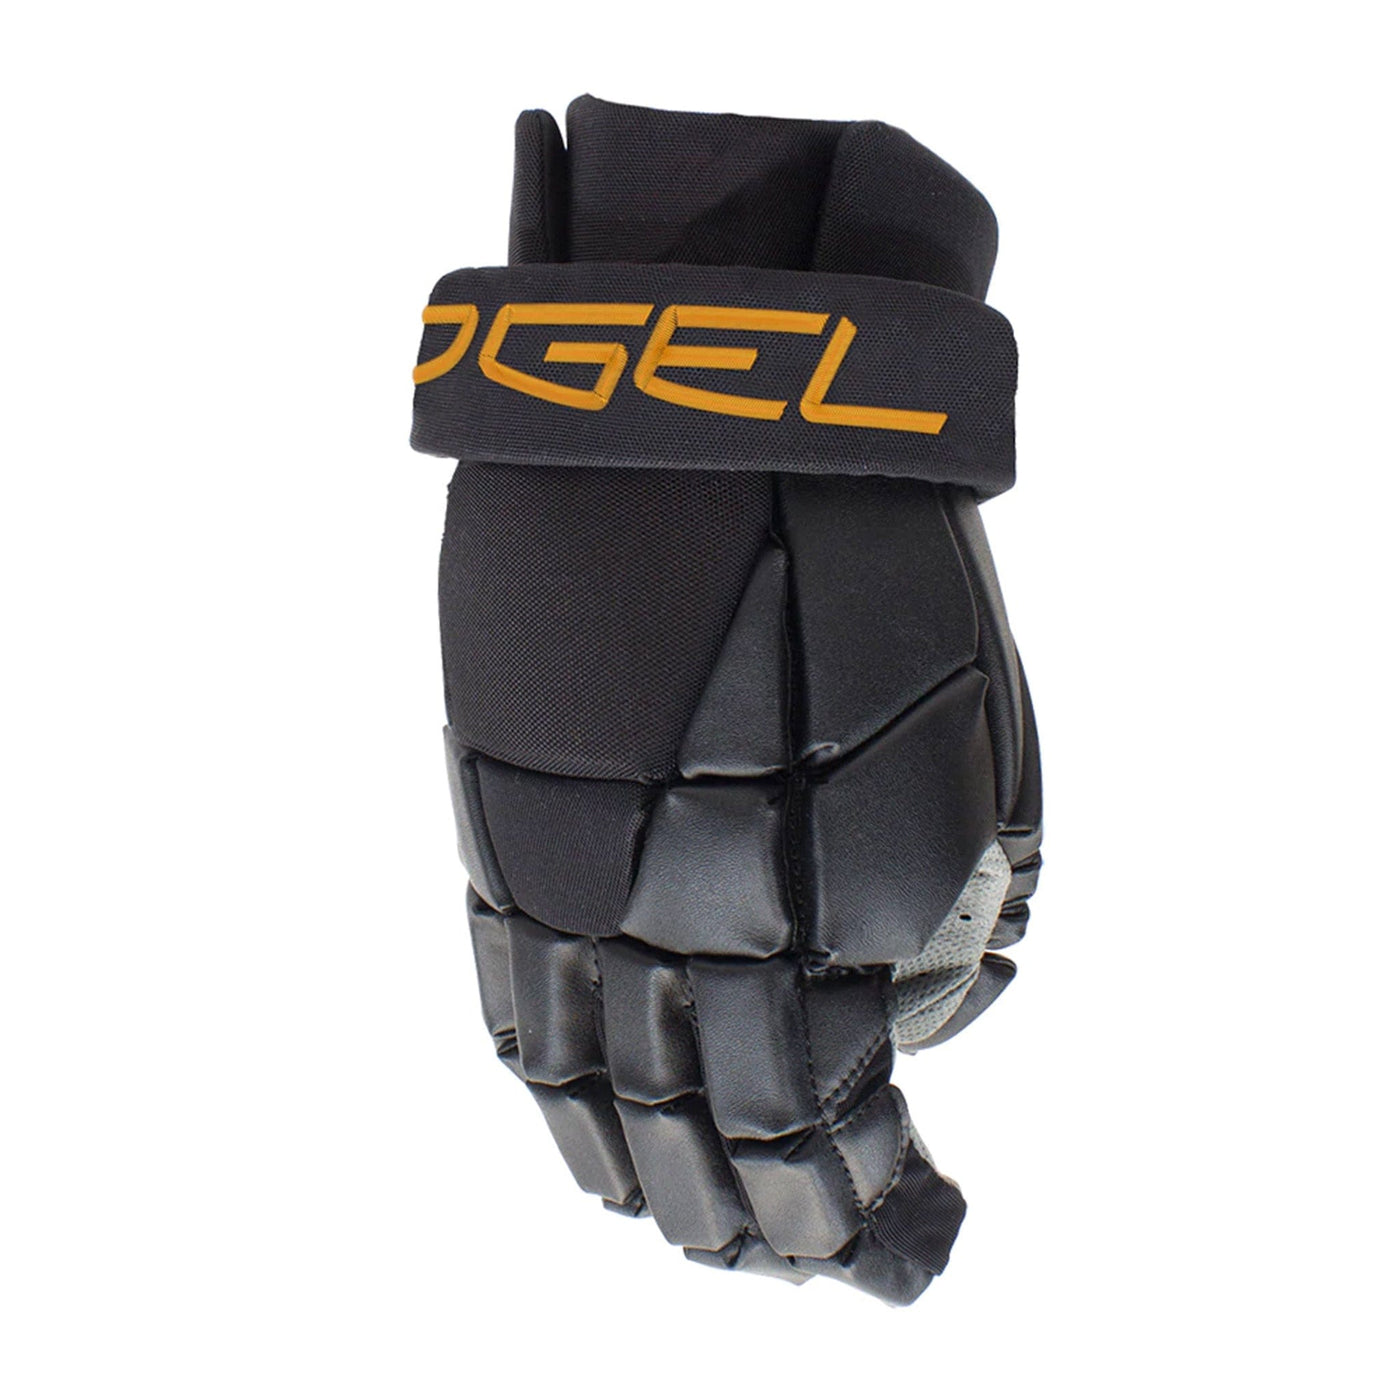 D-Gel 8500 Ball Hockey Glove